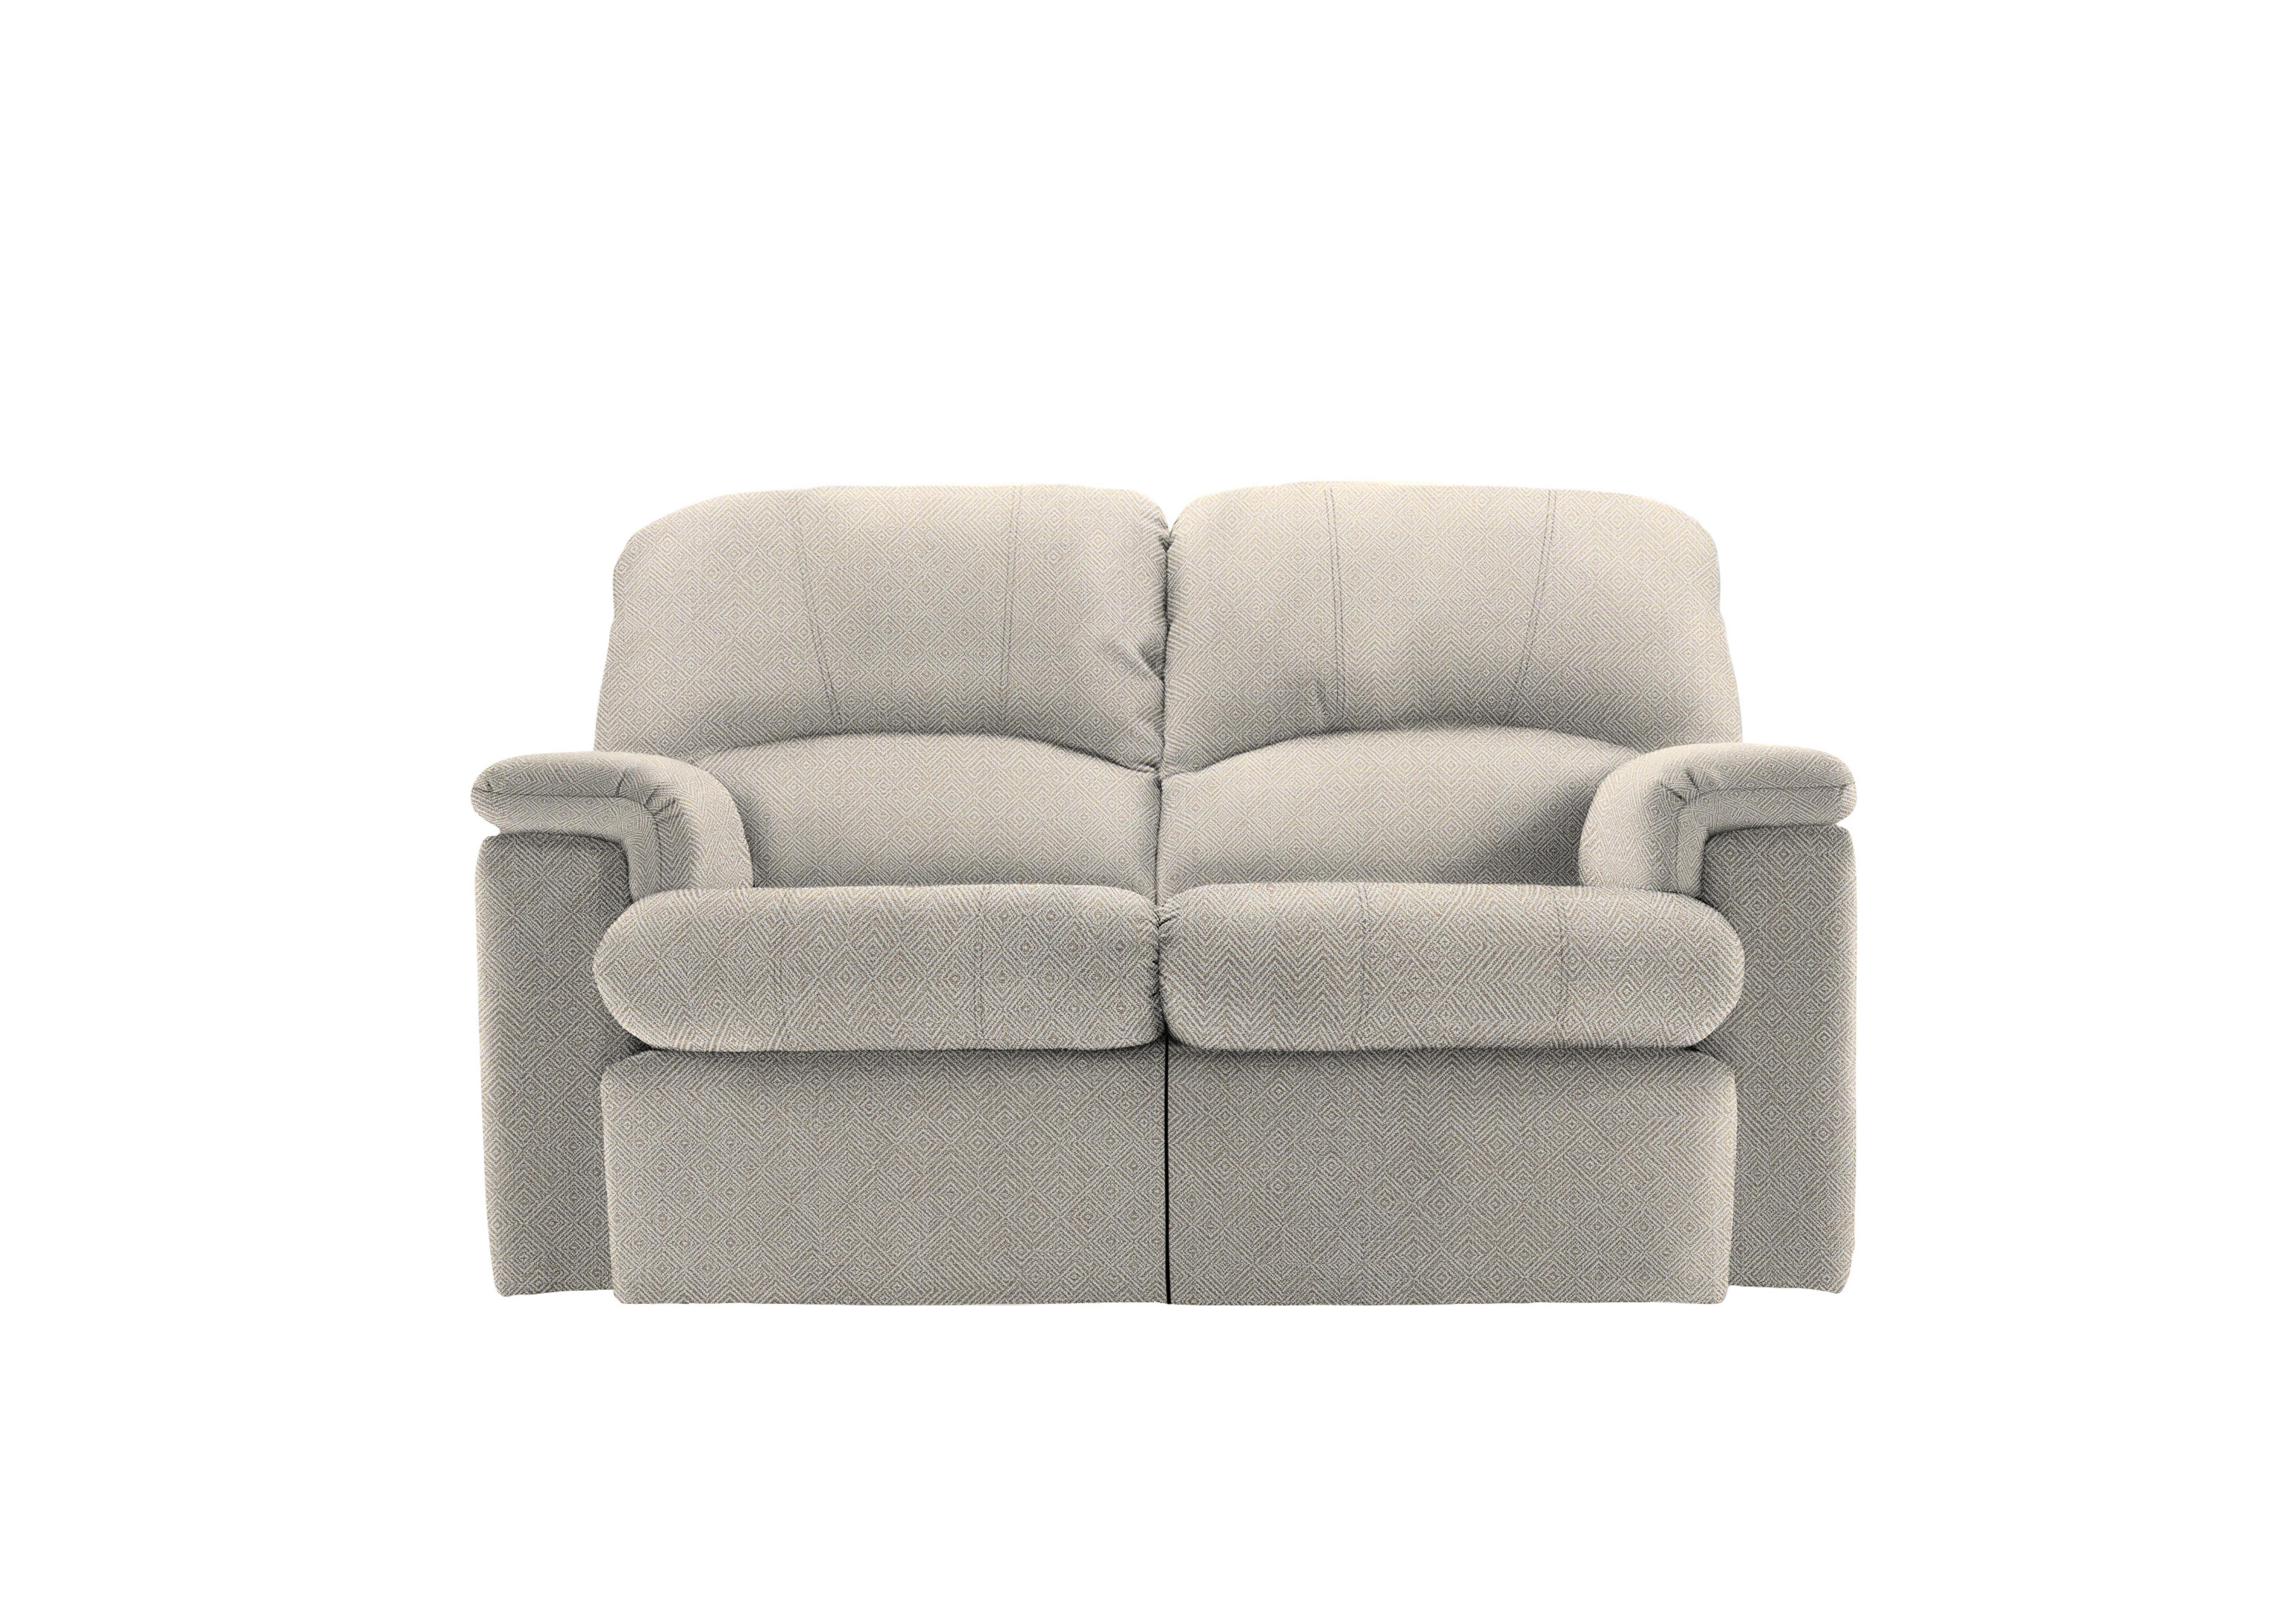 Chloe 2 Seater Fabric Sofa in B011 Nebular Blush on Furniture Village